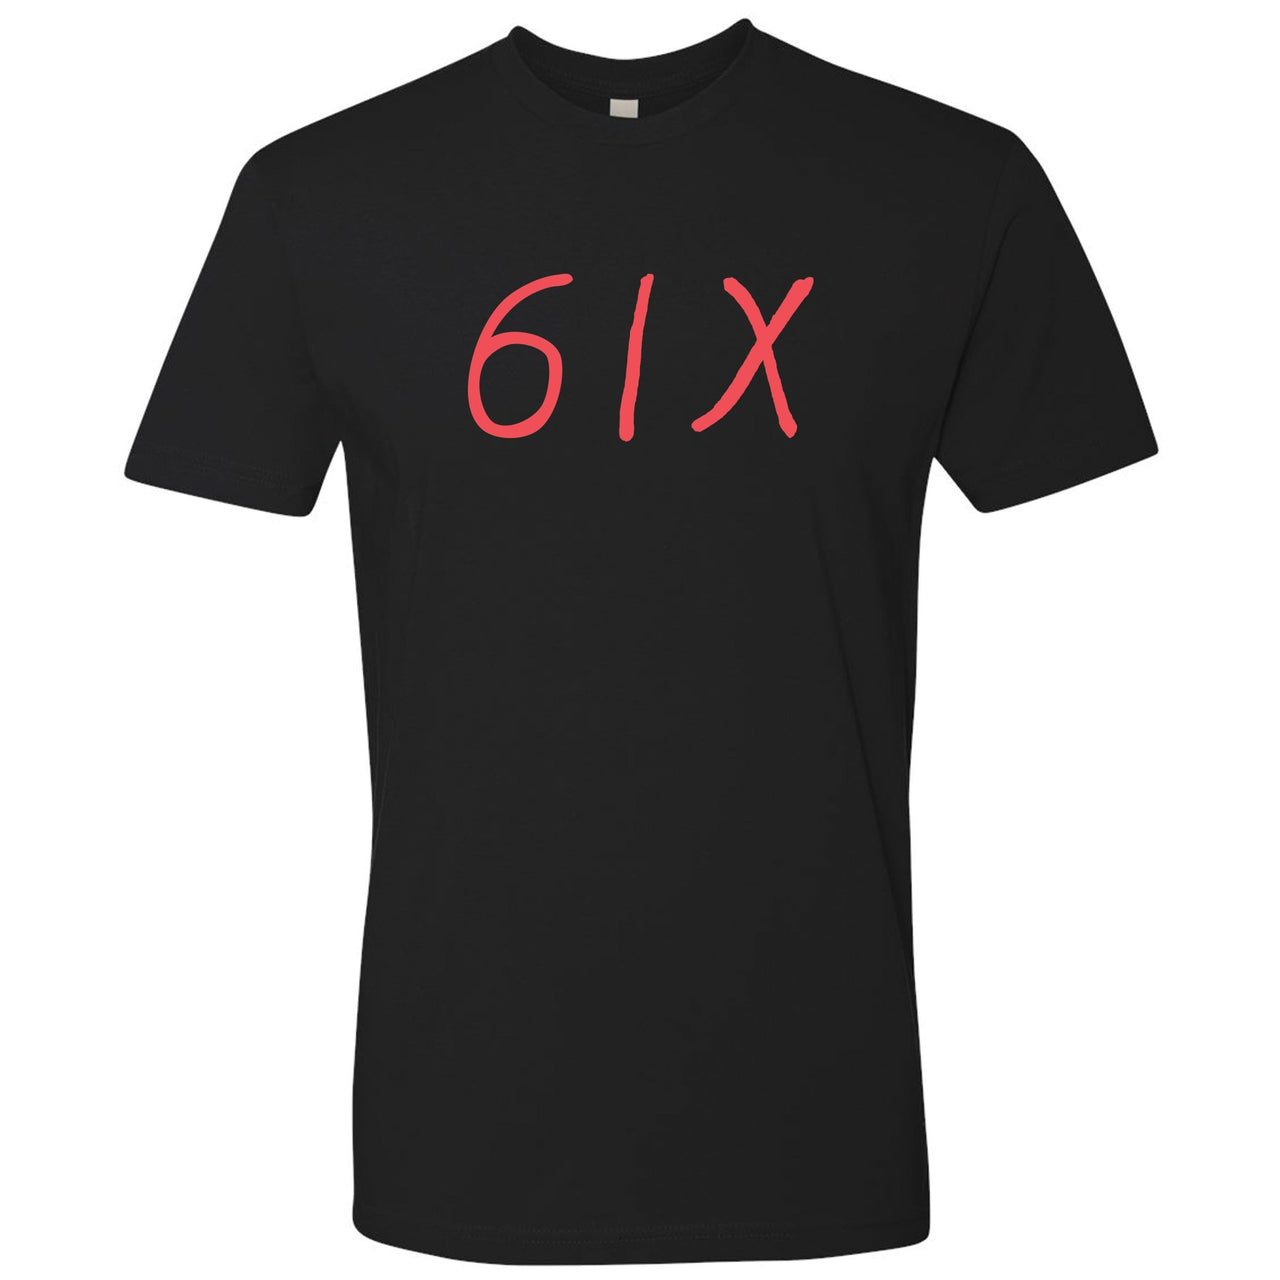 Infrared 6s T Shirt | 6ix, Black